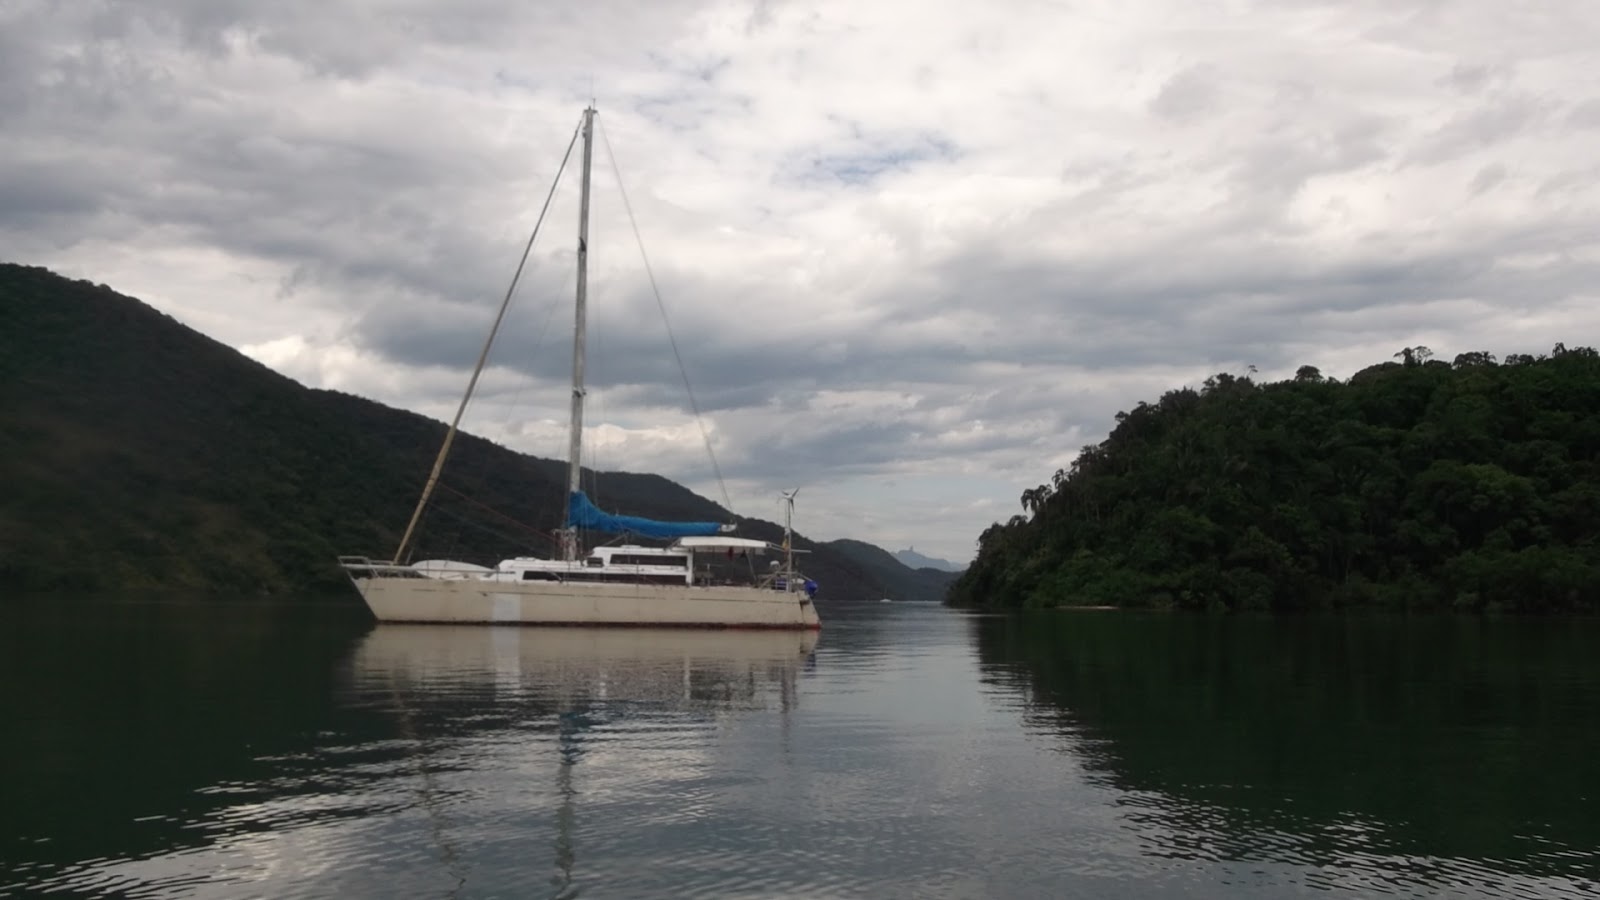 Vente voilier catamaran aluminium 13 mètres: A vendre Catamaran 